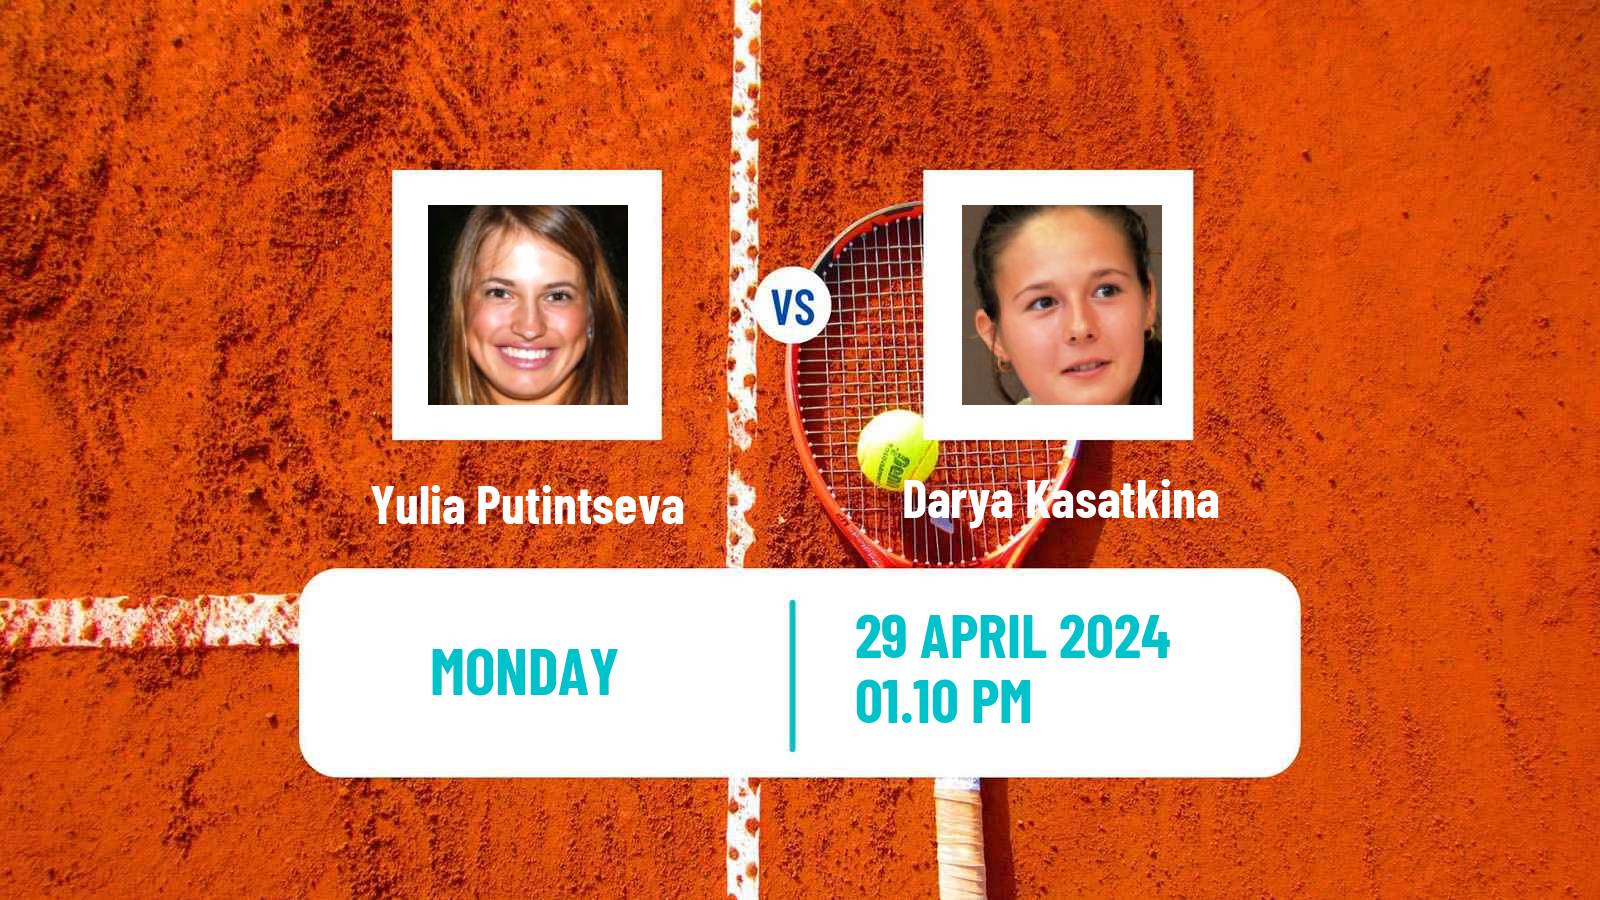 Tennis WTA Madrid Yulia Putintseva - Darya Kasatkina